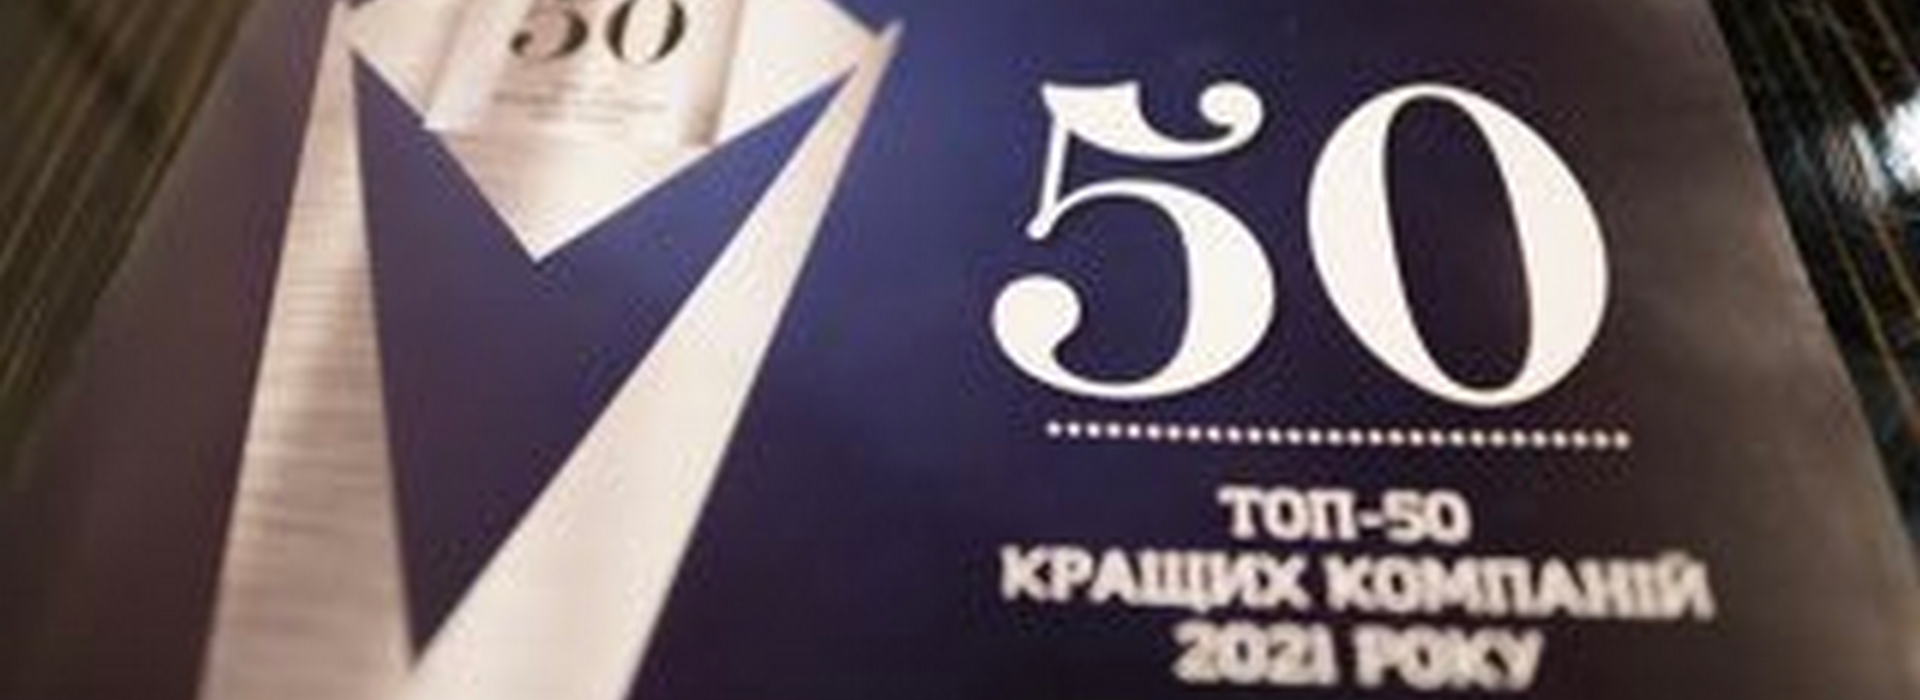 Carlsberg Ukraine Is on the List of the 50 Best Companies in Ukraine